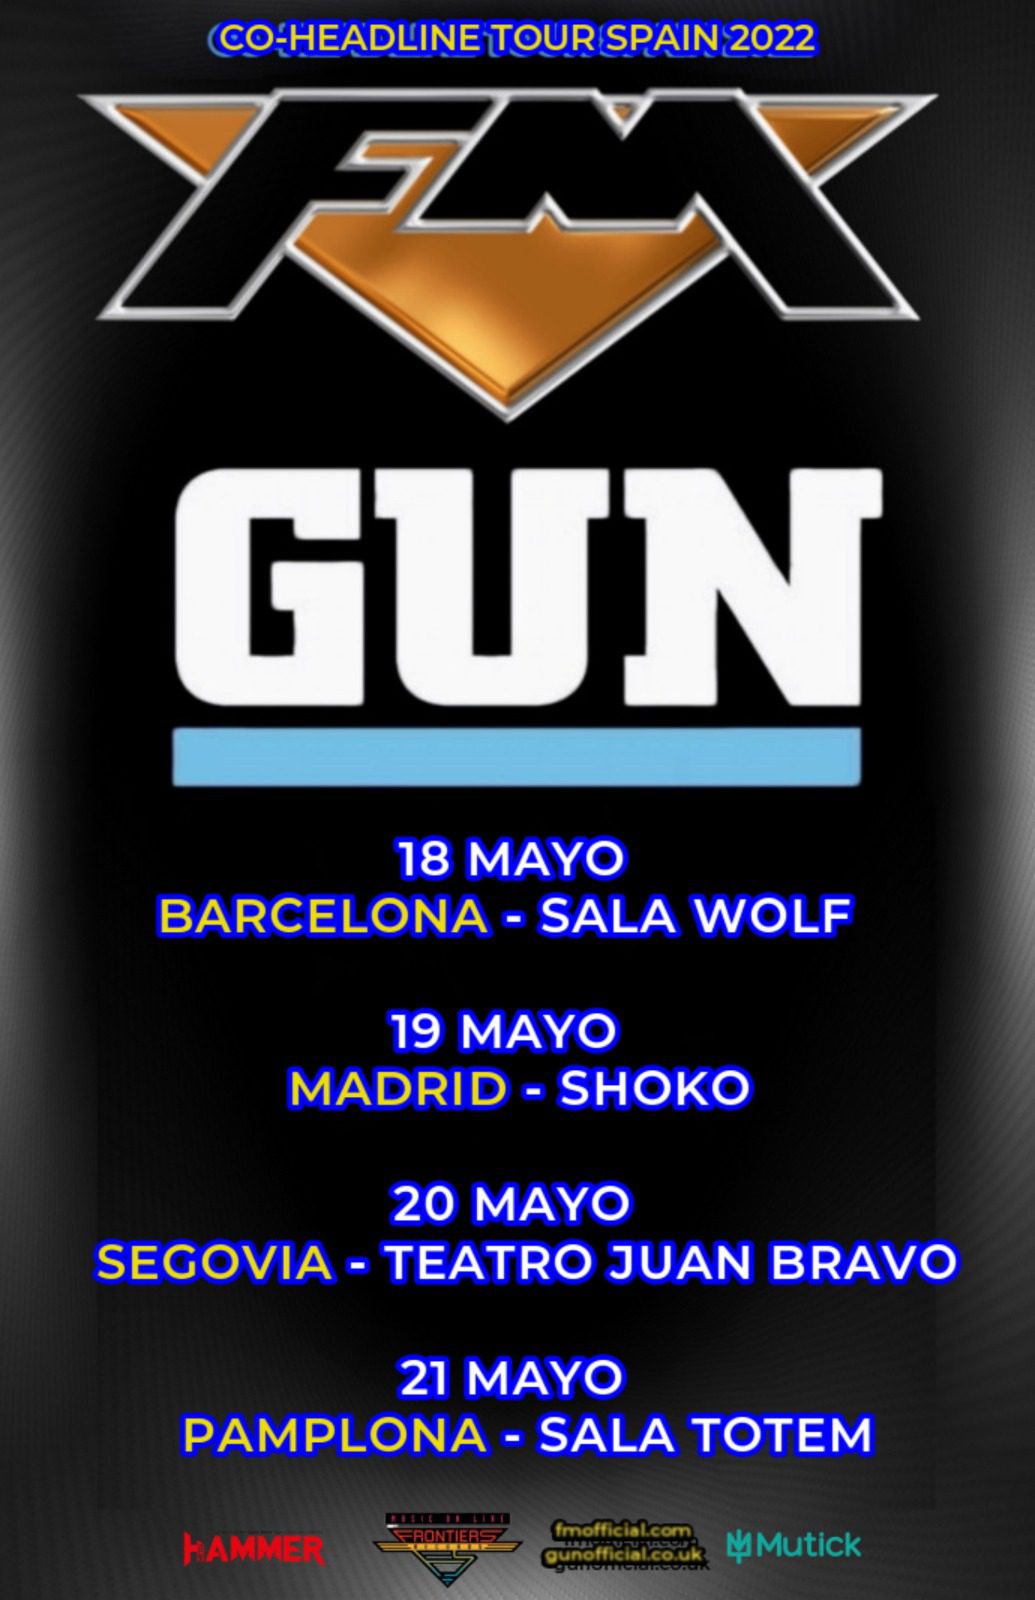 Mañana comienza la gira de FM y GUN “Co-Headline Tour España 2022”